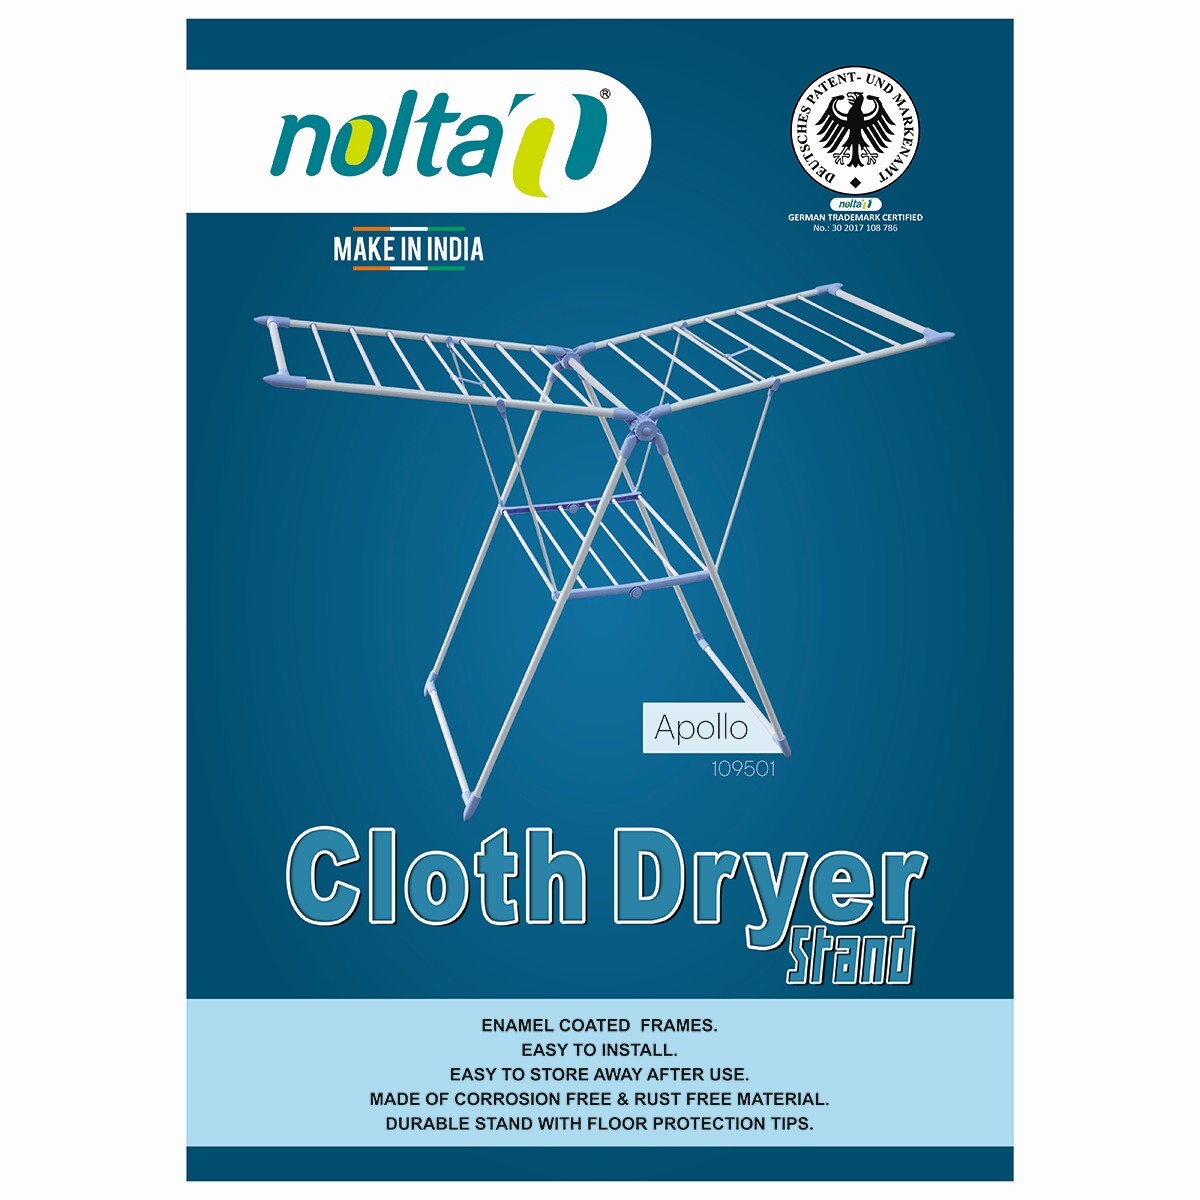 Nolta Cloth Dryer 109501